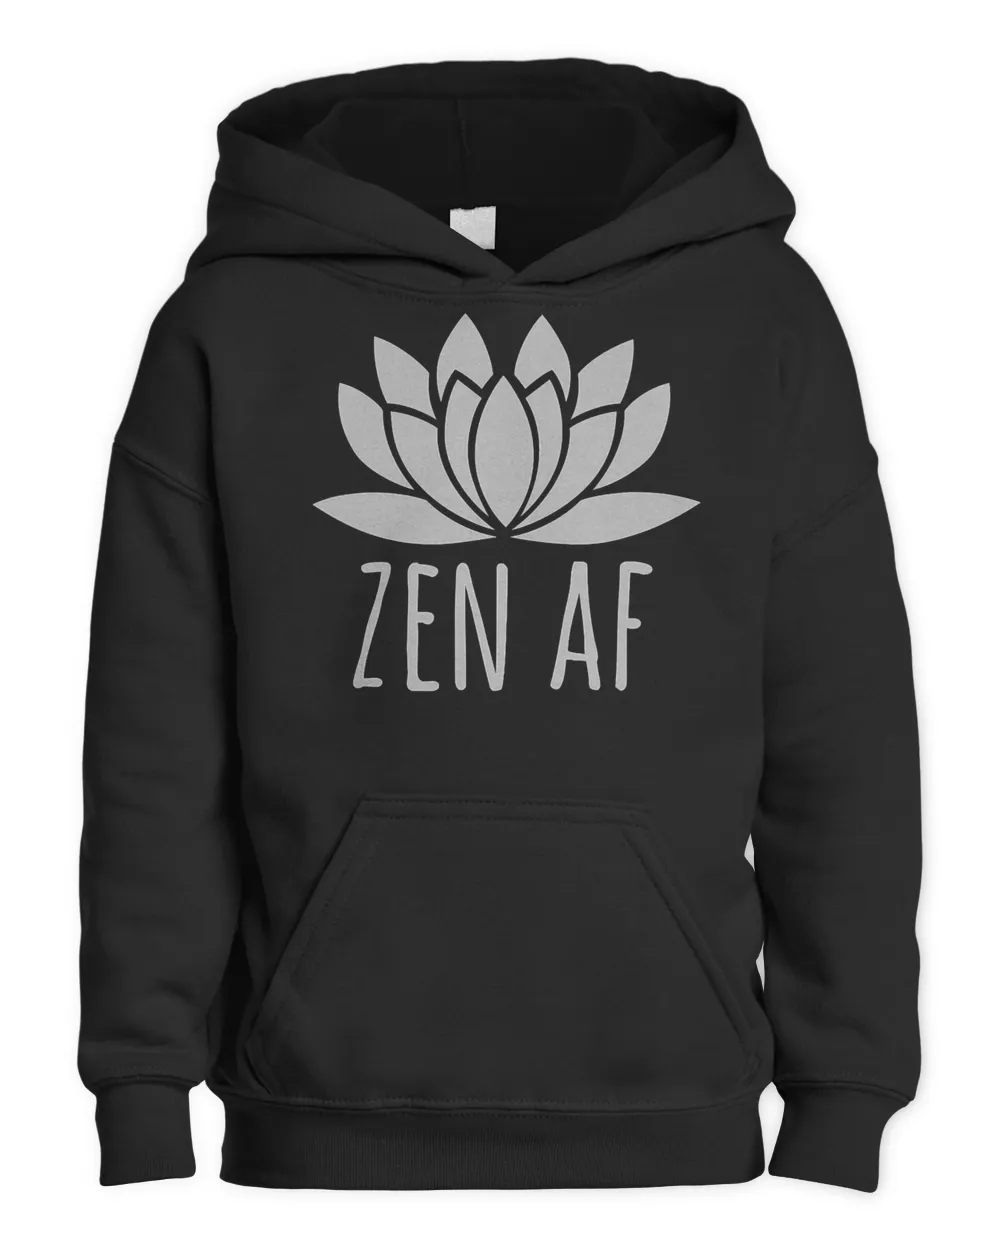 Zen AF Shirt  Zen and Buddhism Shirts T-Shirt